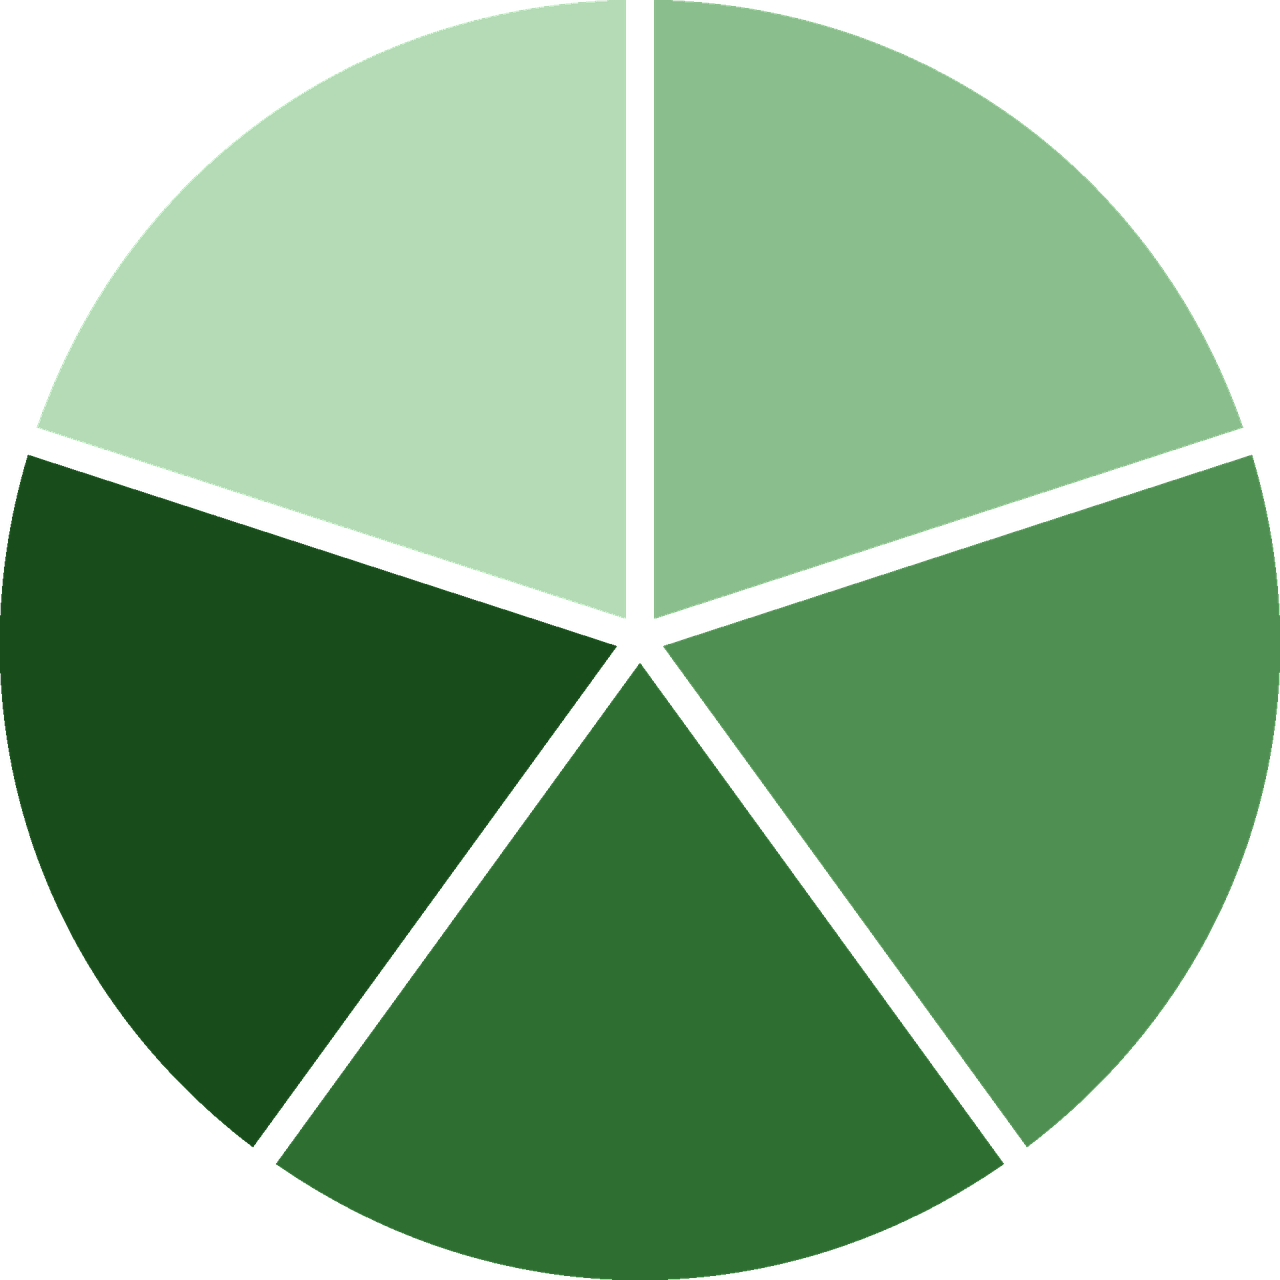 a green pie chart on a black background, a diagram, de stijl, five points of articulation, natural color scheme, profile pic, my pov